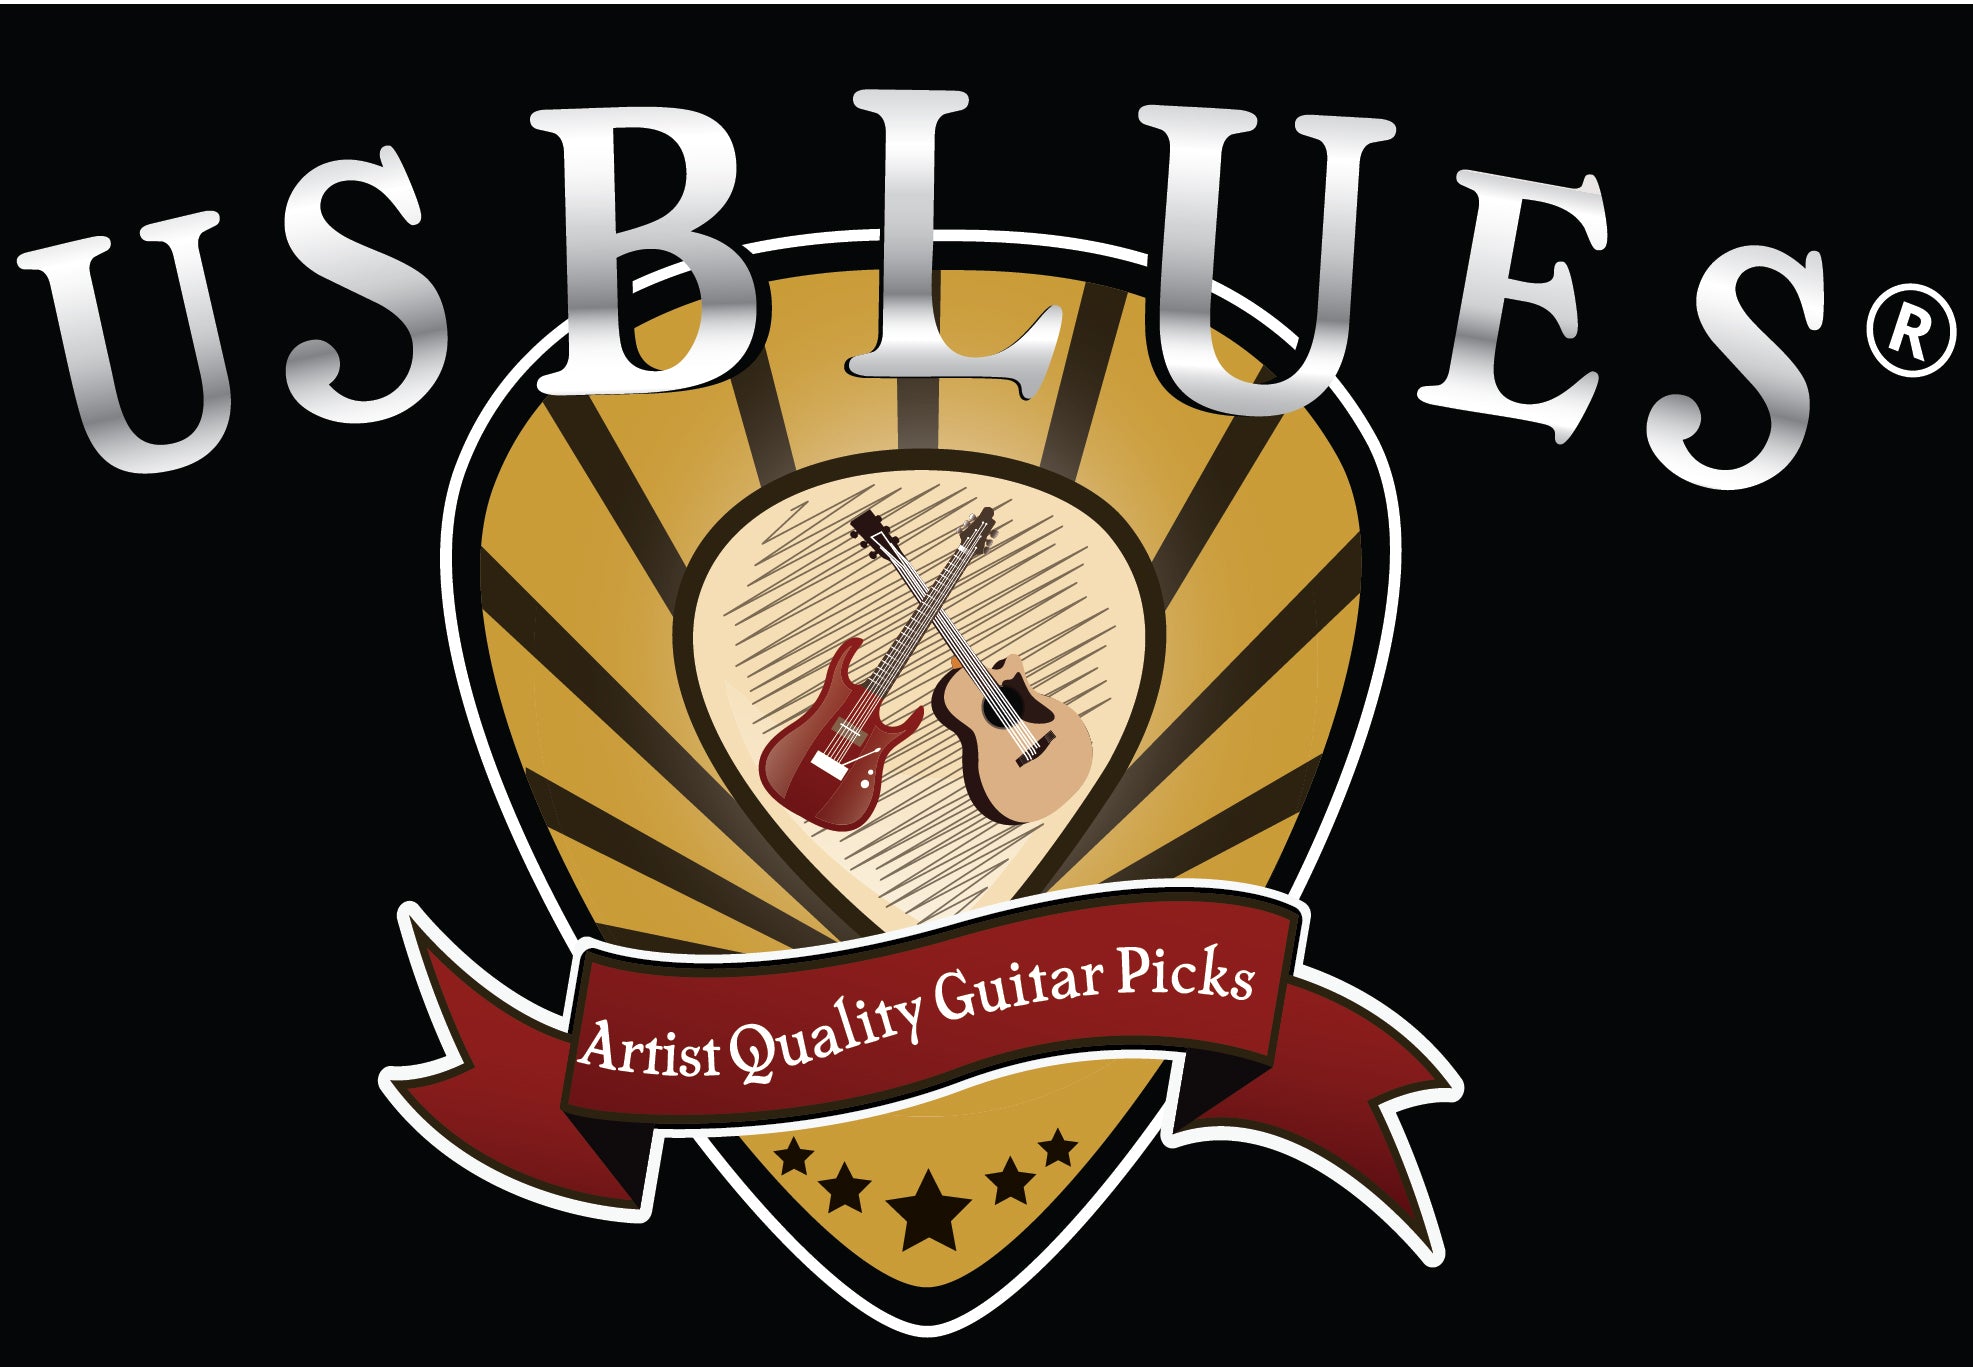 US Blues® Artist Quality Guitar Picks